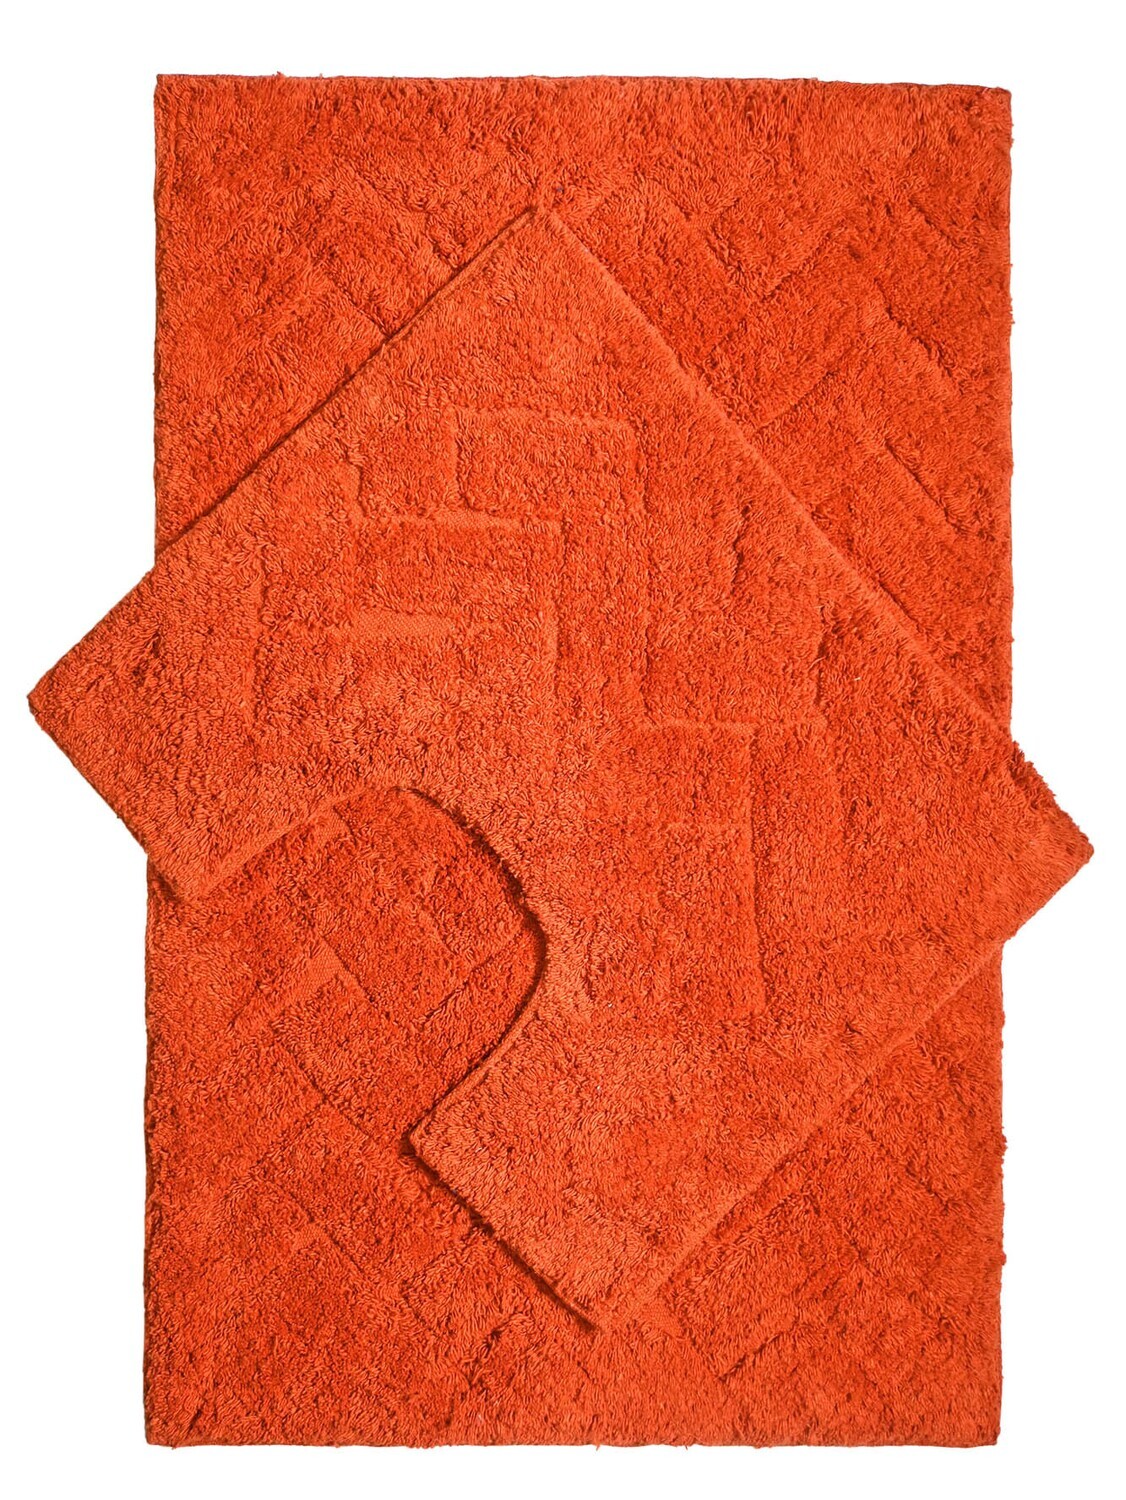 H&B 2 Piece Cotton Bathroom mat Rug Orange 50cm X 80cm (PEDESTAL MATS) 